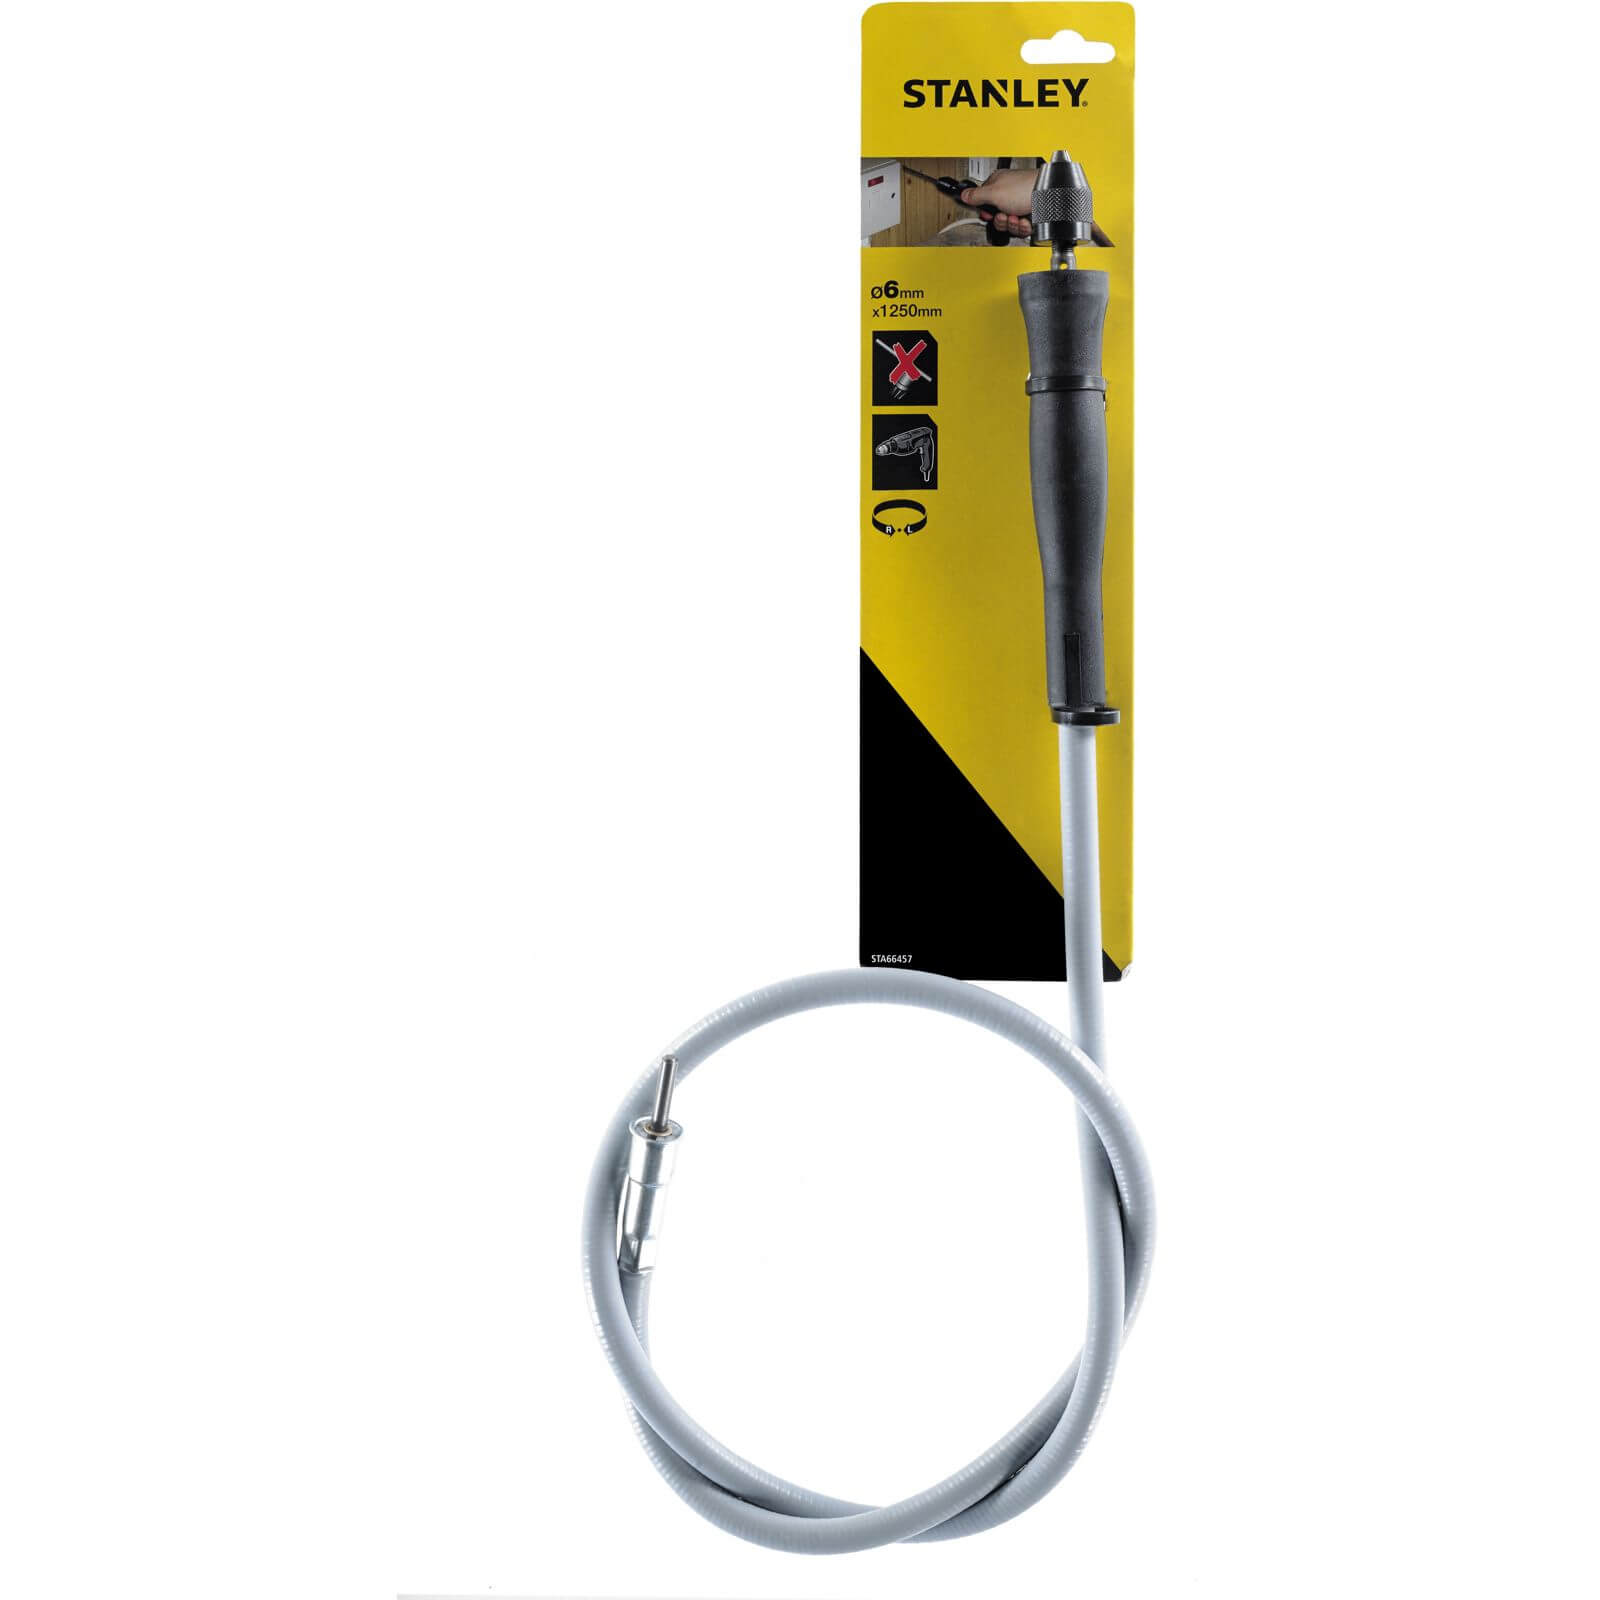 Stanley 1300mm Flexible Drive Shaft - STA66457-QZ